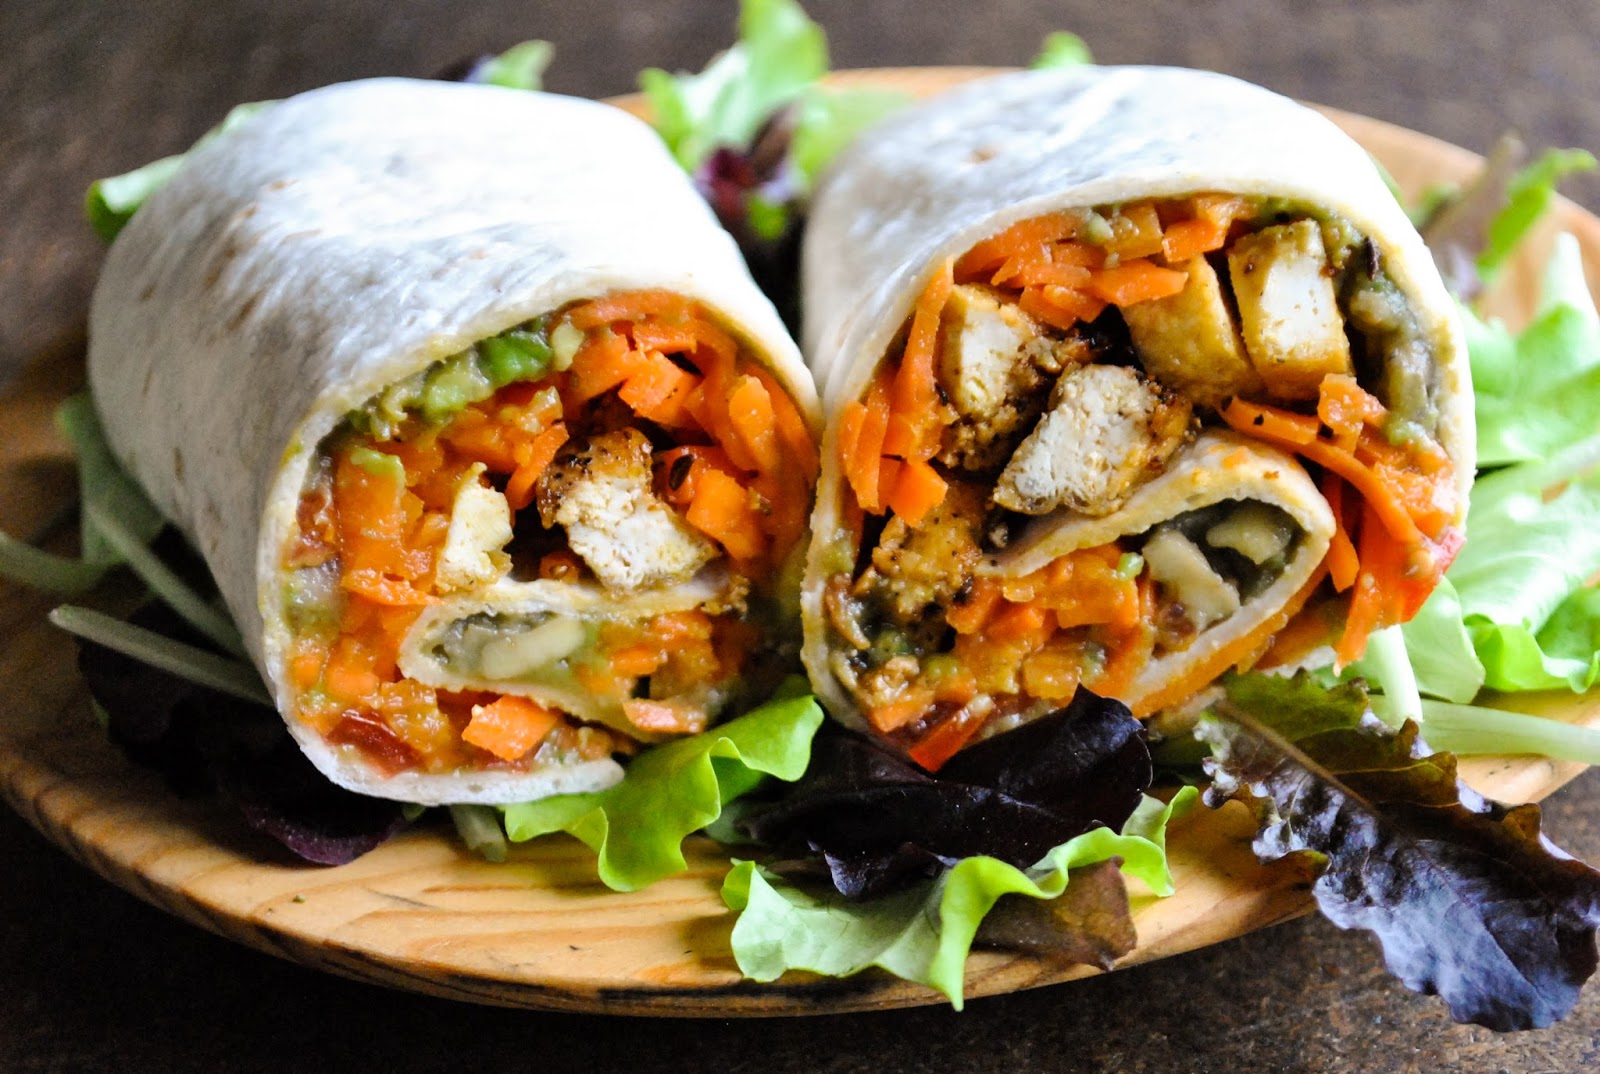 Vegan wraps with carrot noodles, pepper tofu and guacamole |VeganSandra